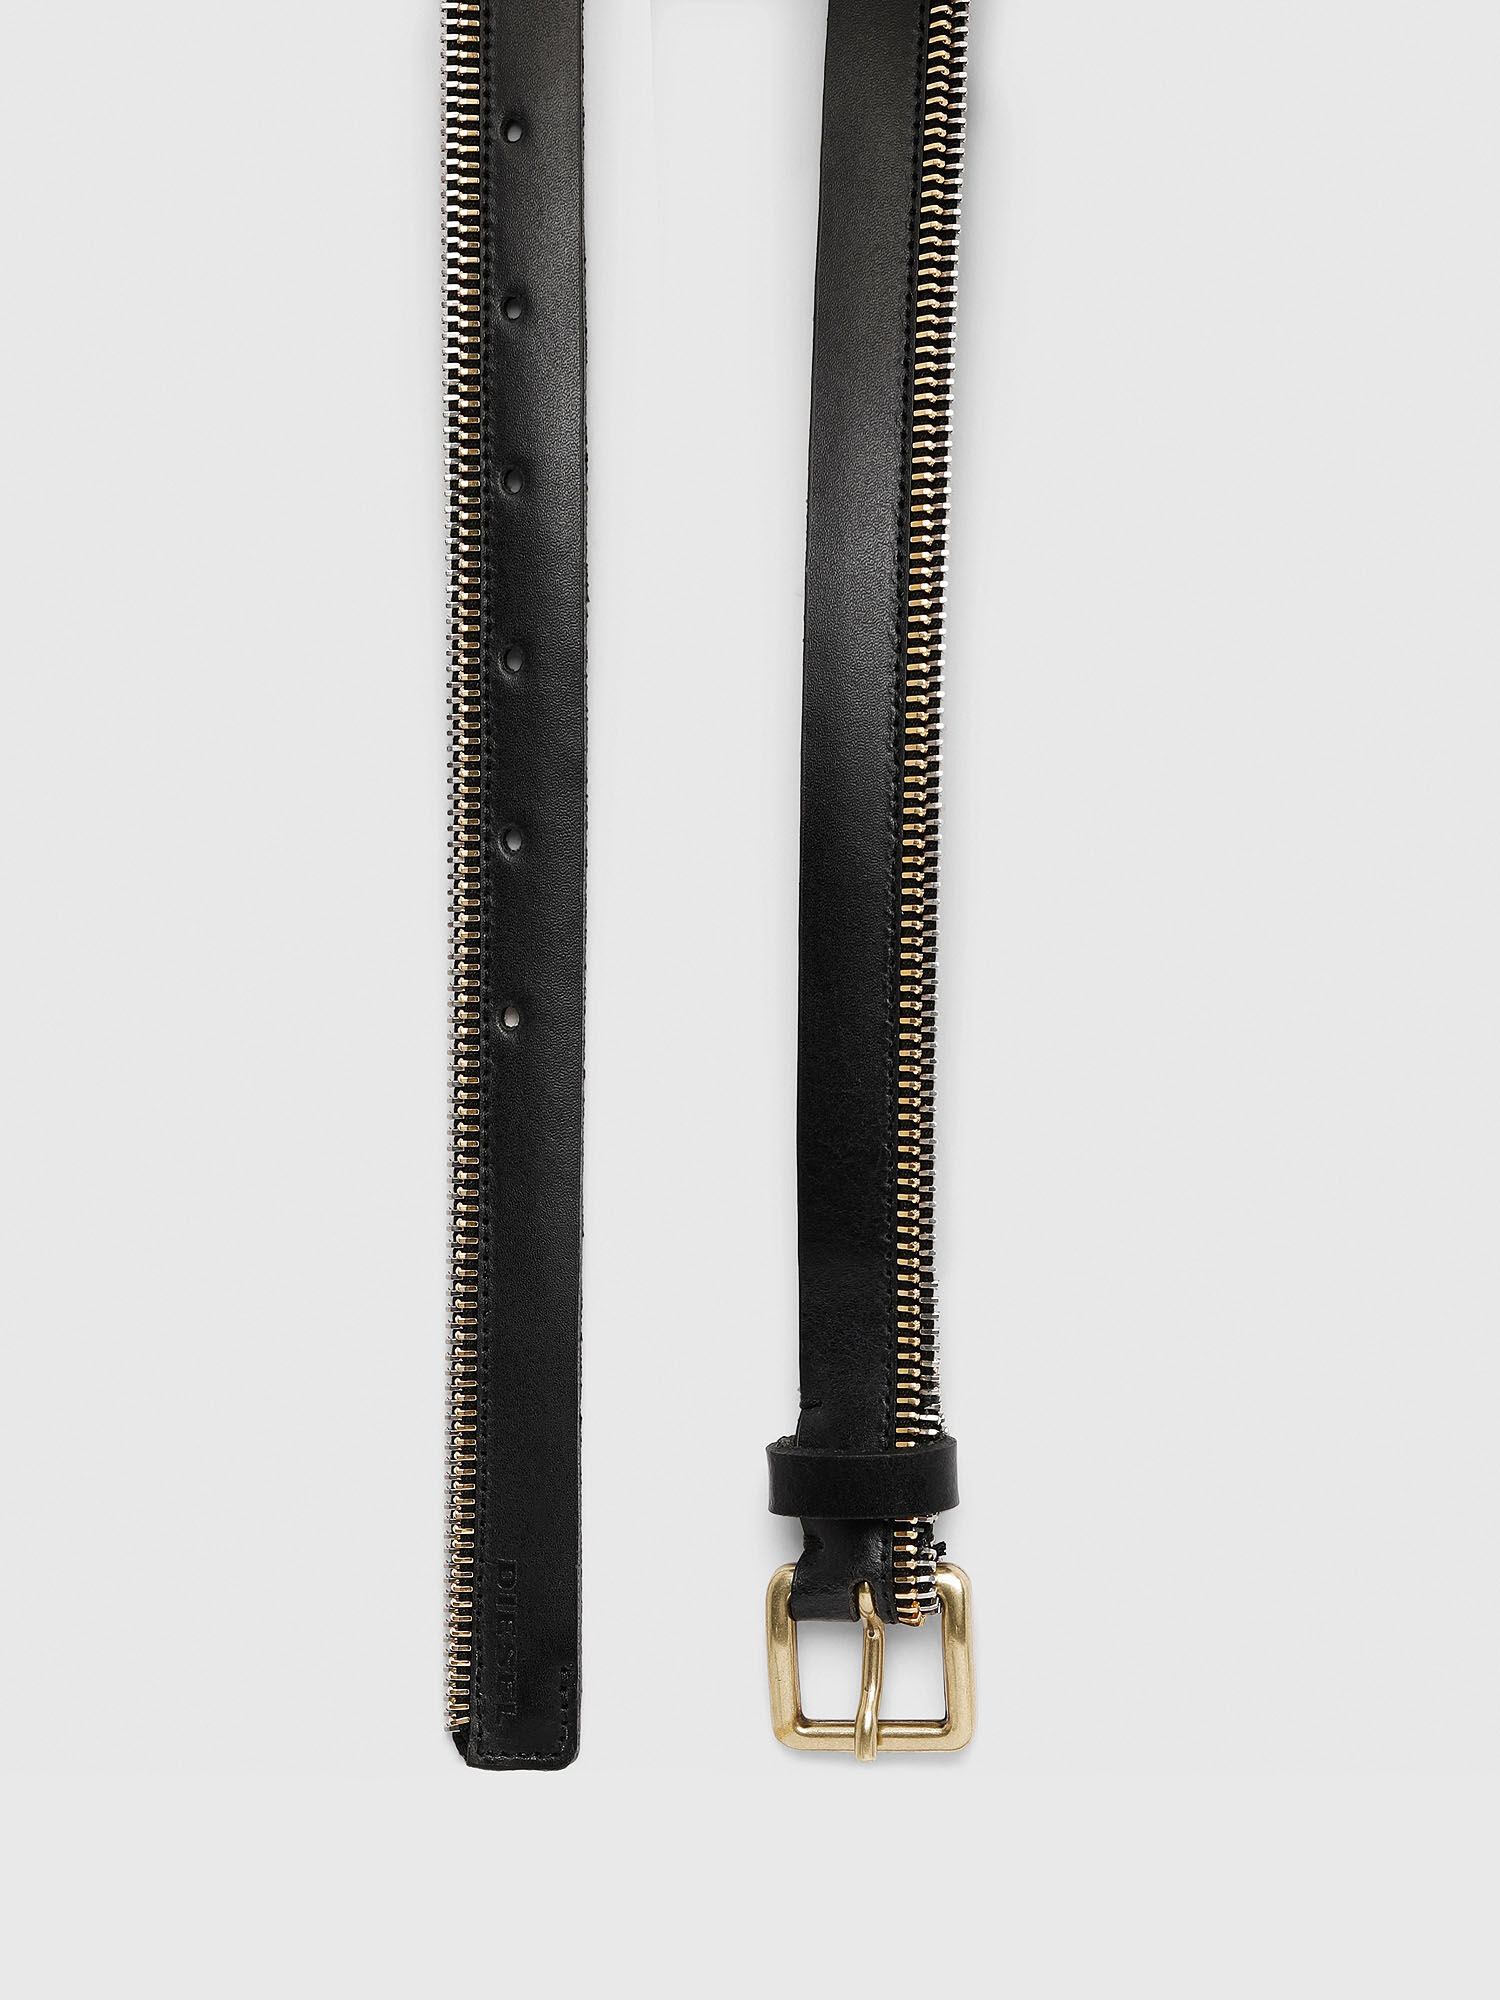  ESPOFY Women's Belt Genuine Leather Belt with Single